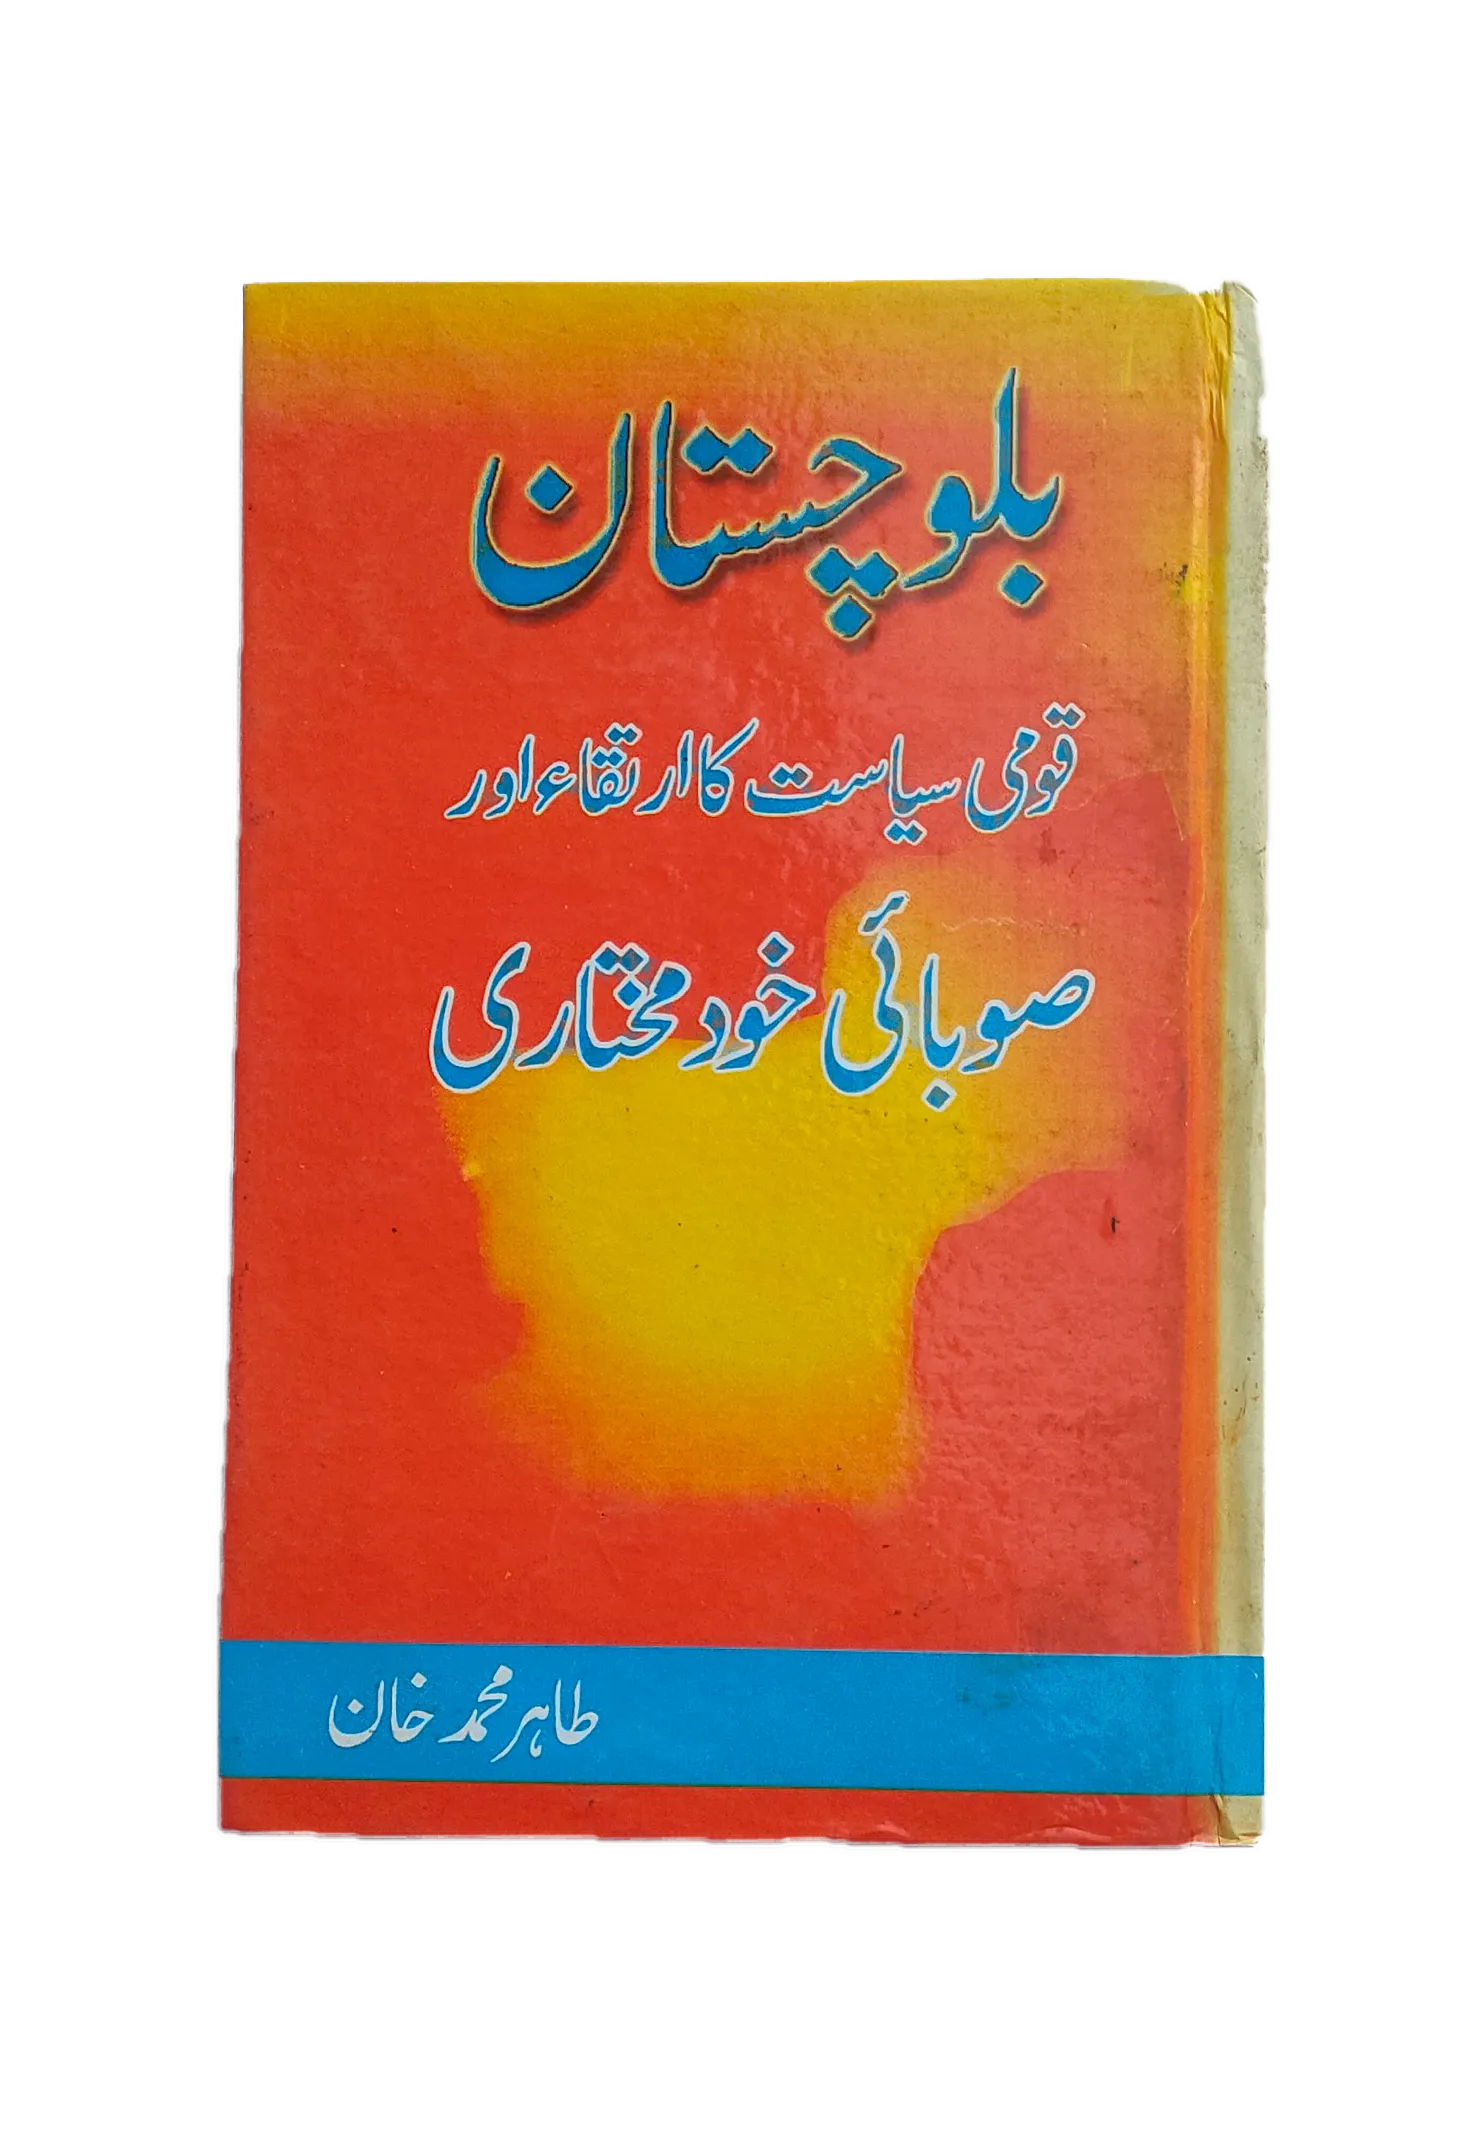 Balochistan - Qoumi Siyasat Ka Irtaqa Aur Soobai Khud Mukhtari (Balochistan - Evolution of National Politics and Provincial Autonomy)